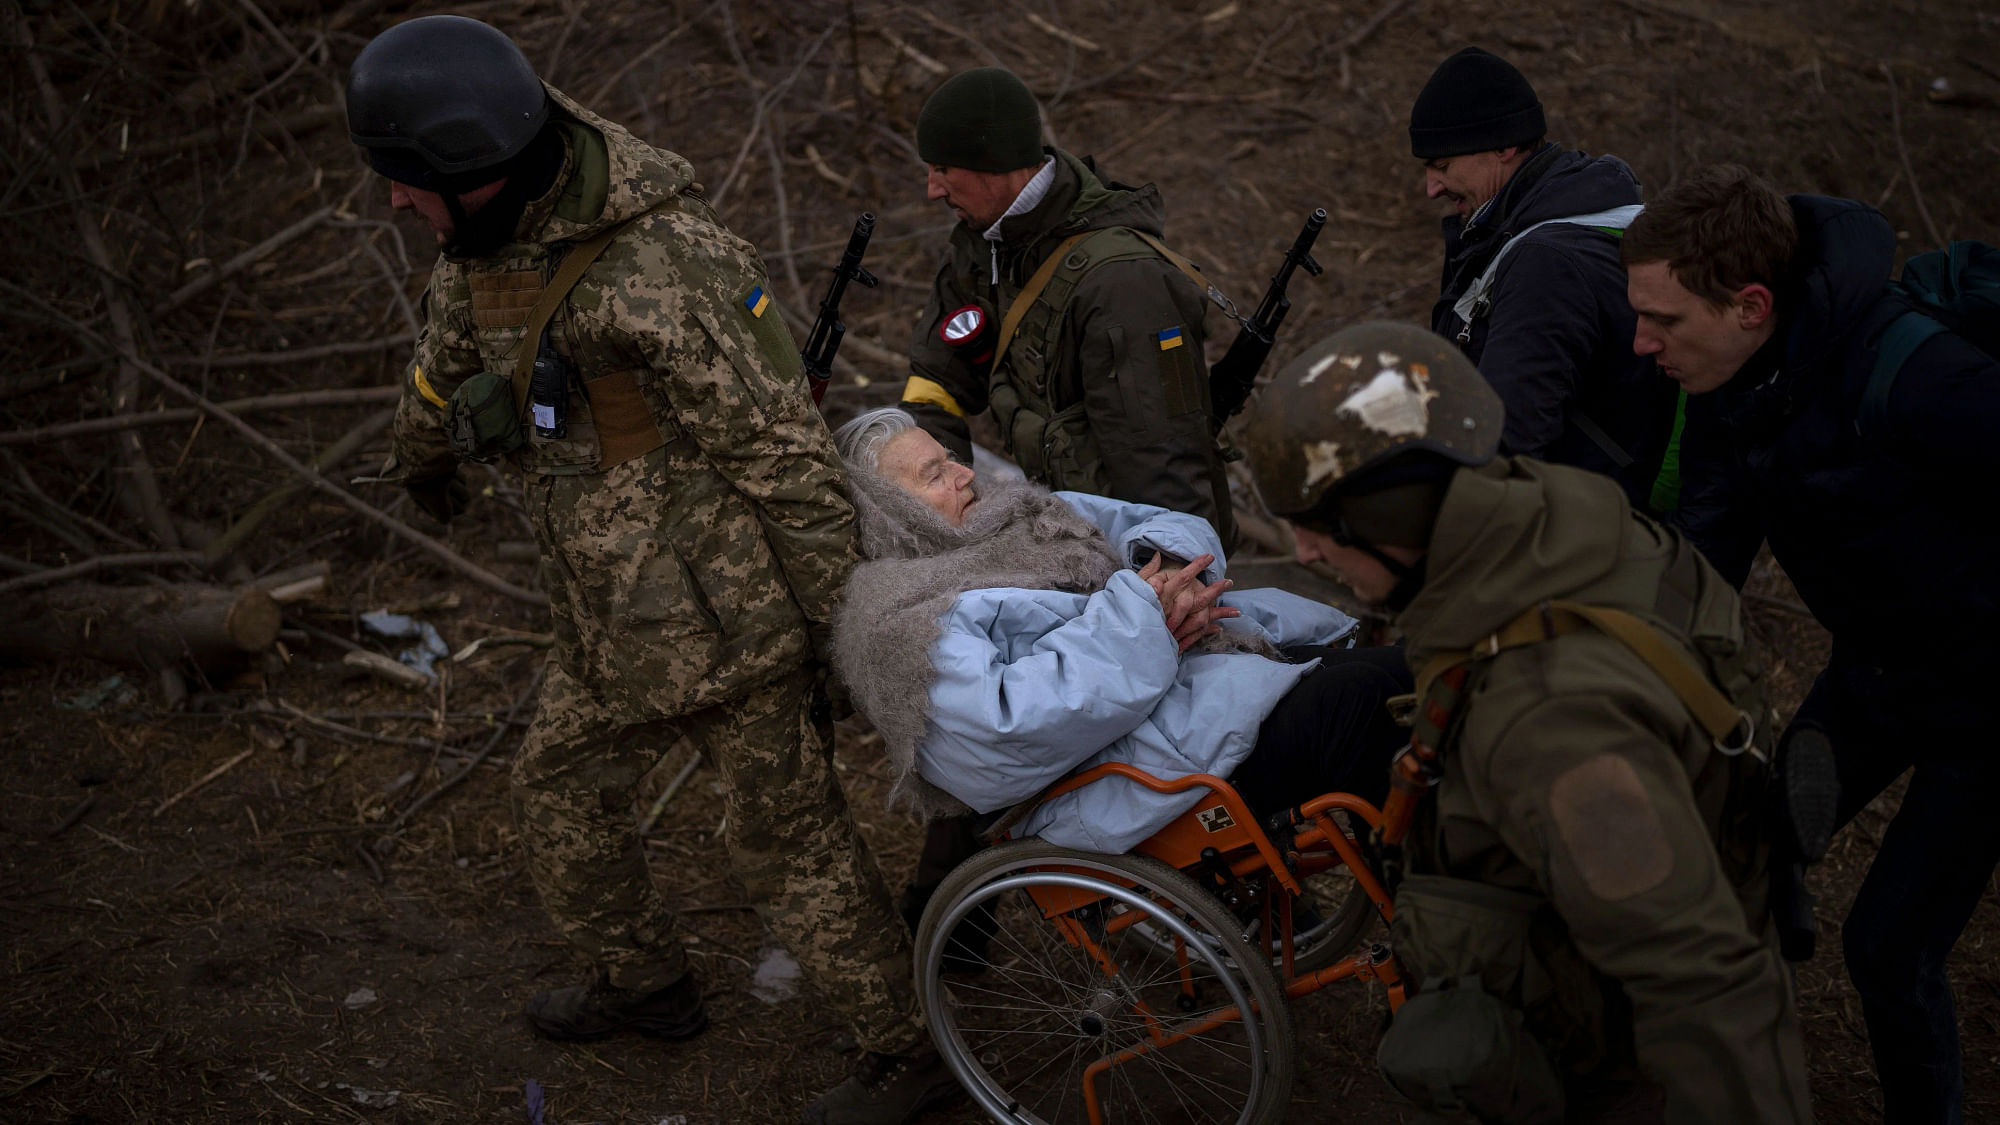 <div class="paragraphs"><p>यूक्रेनी सैनिक और मिलिशियामेन एक महिला को व्हीलचेयर में ले जाते हुए (7 मार्च 2022)</p></div>